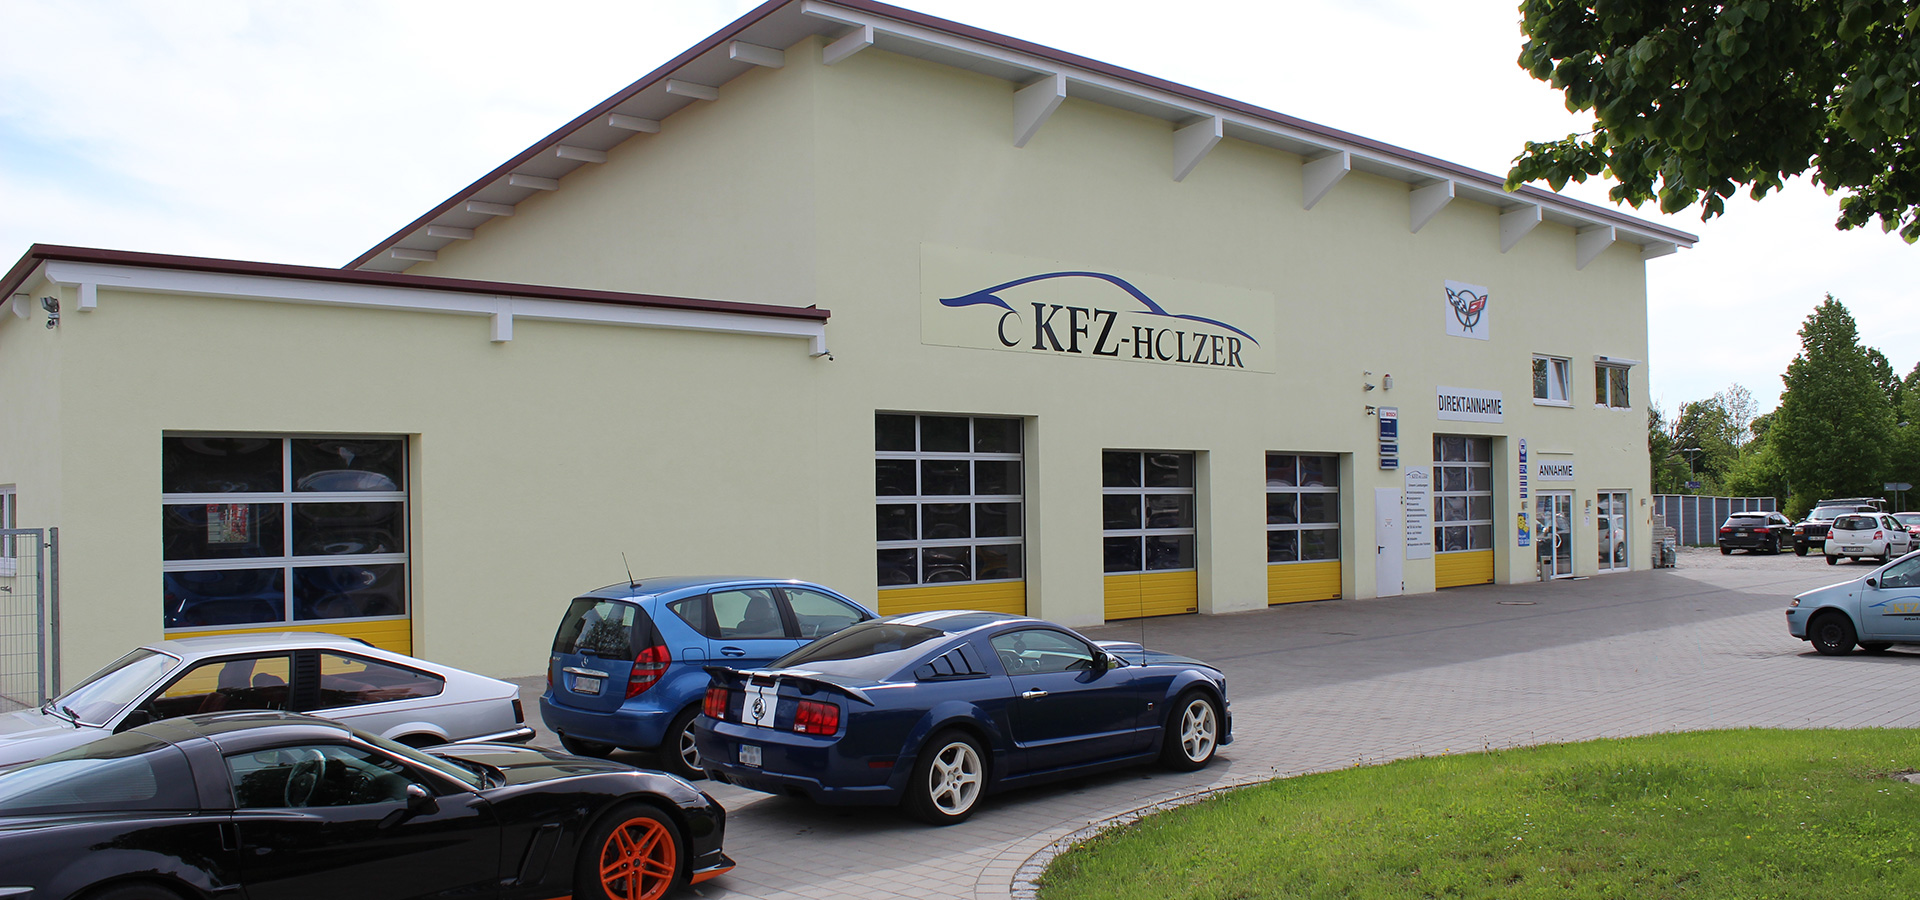 kfz-holzer-firma